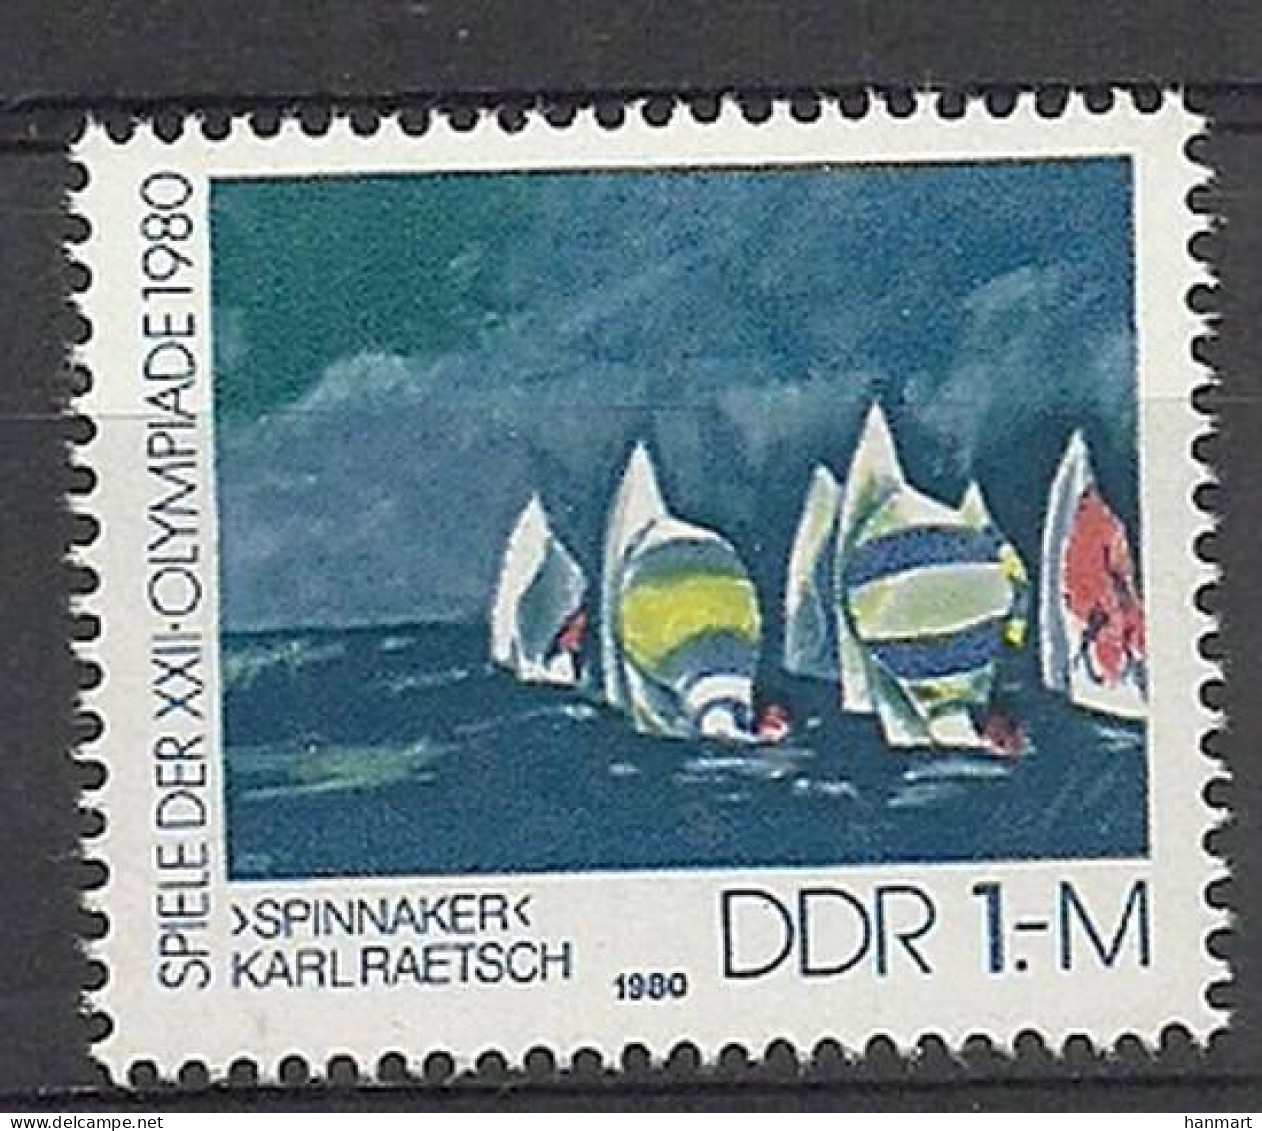 Germany, Democratic Republic (DDR) 1980 Mi 2531 MNH  (ZE5 DDR2531) - Sailing